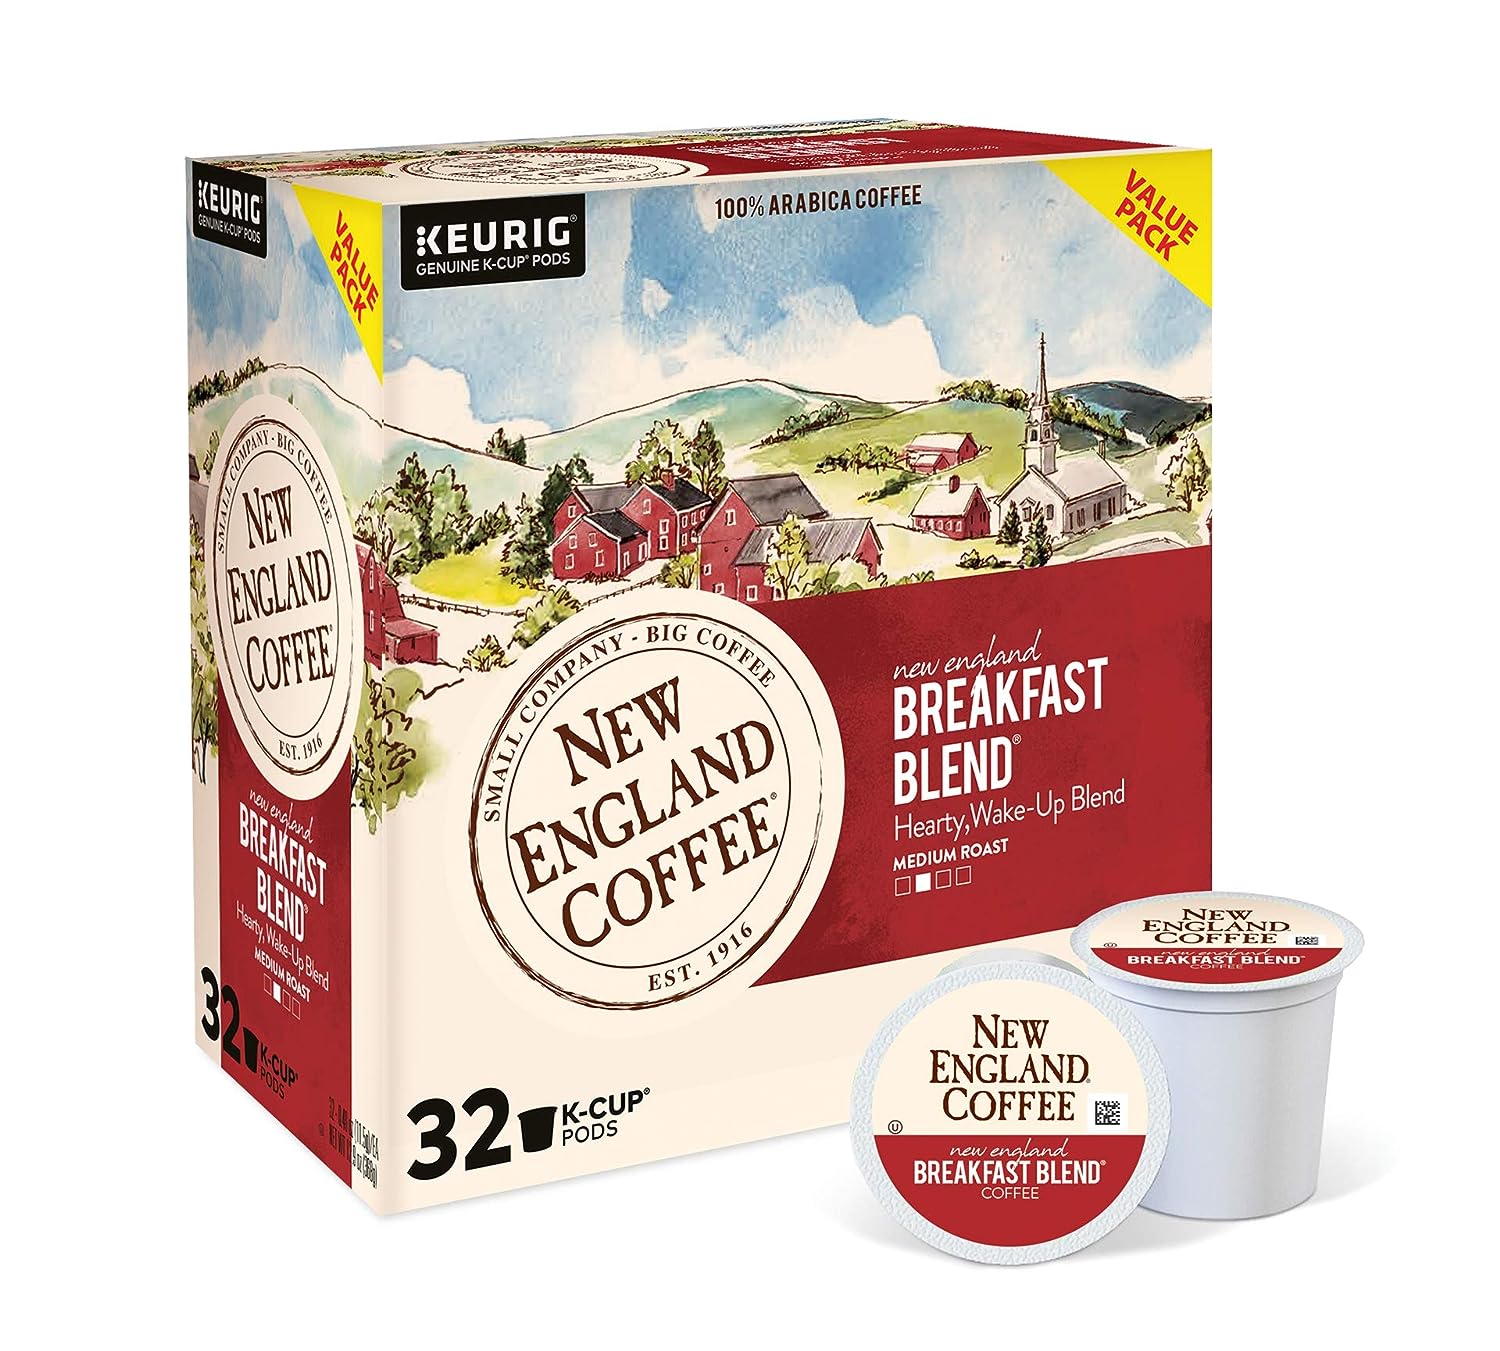 New England Coffee New England Breakfast Blend Medium Roast K-Cup Pods 32 ct. Box